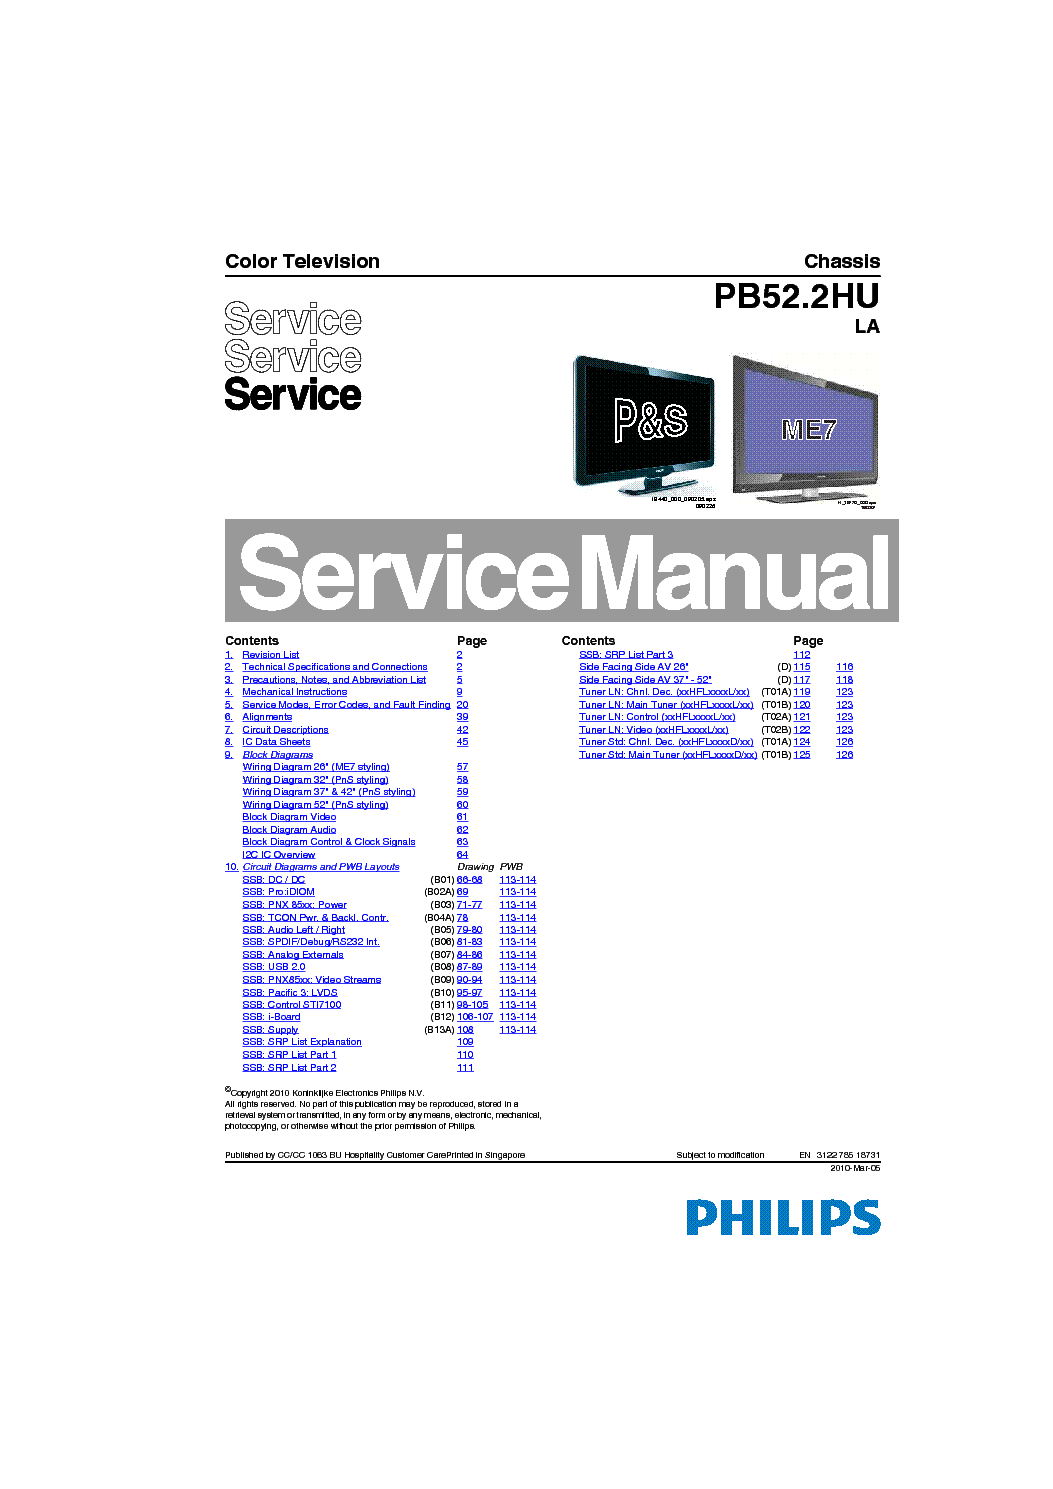 PHILIPS PB52.2HU LA CHASSIS LCD TV SM service manual (1st page)